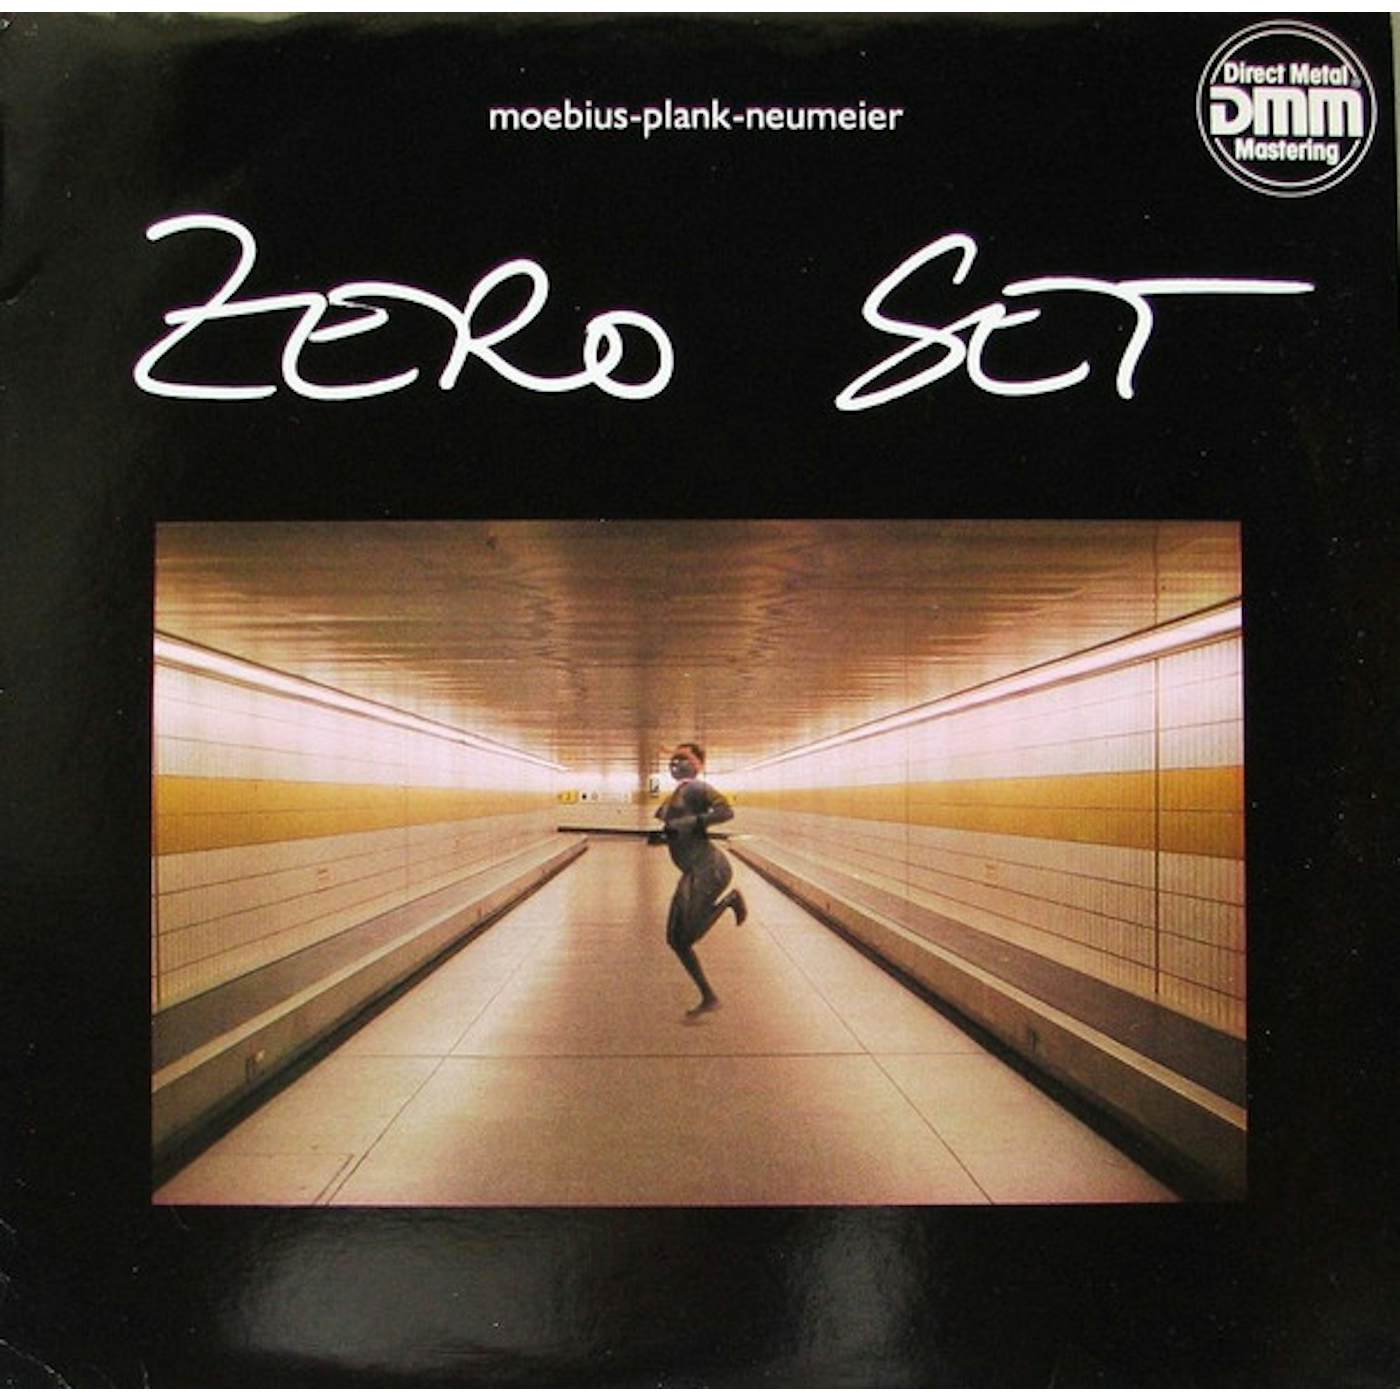 Dieter Moebius / Conny Plank / Mani Neumeier Zero Set Vinyl Record